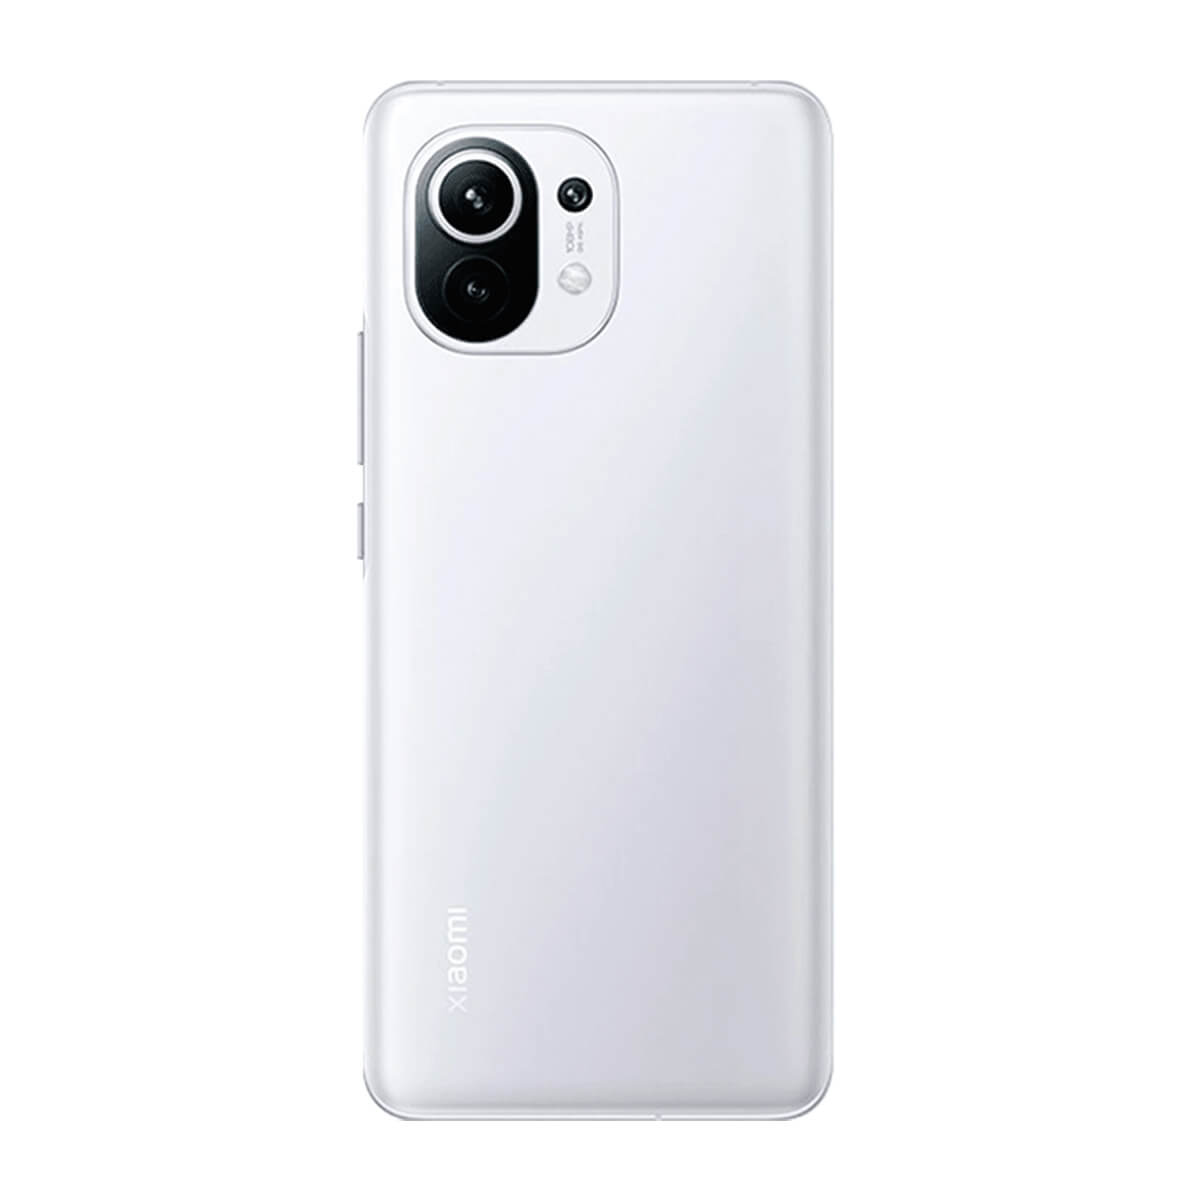 XIAOMI MI 11 5G 8GB/256GB BLANCO (FROSTY WHITE) DUAL SIM | Móviles libres